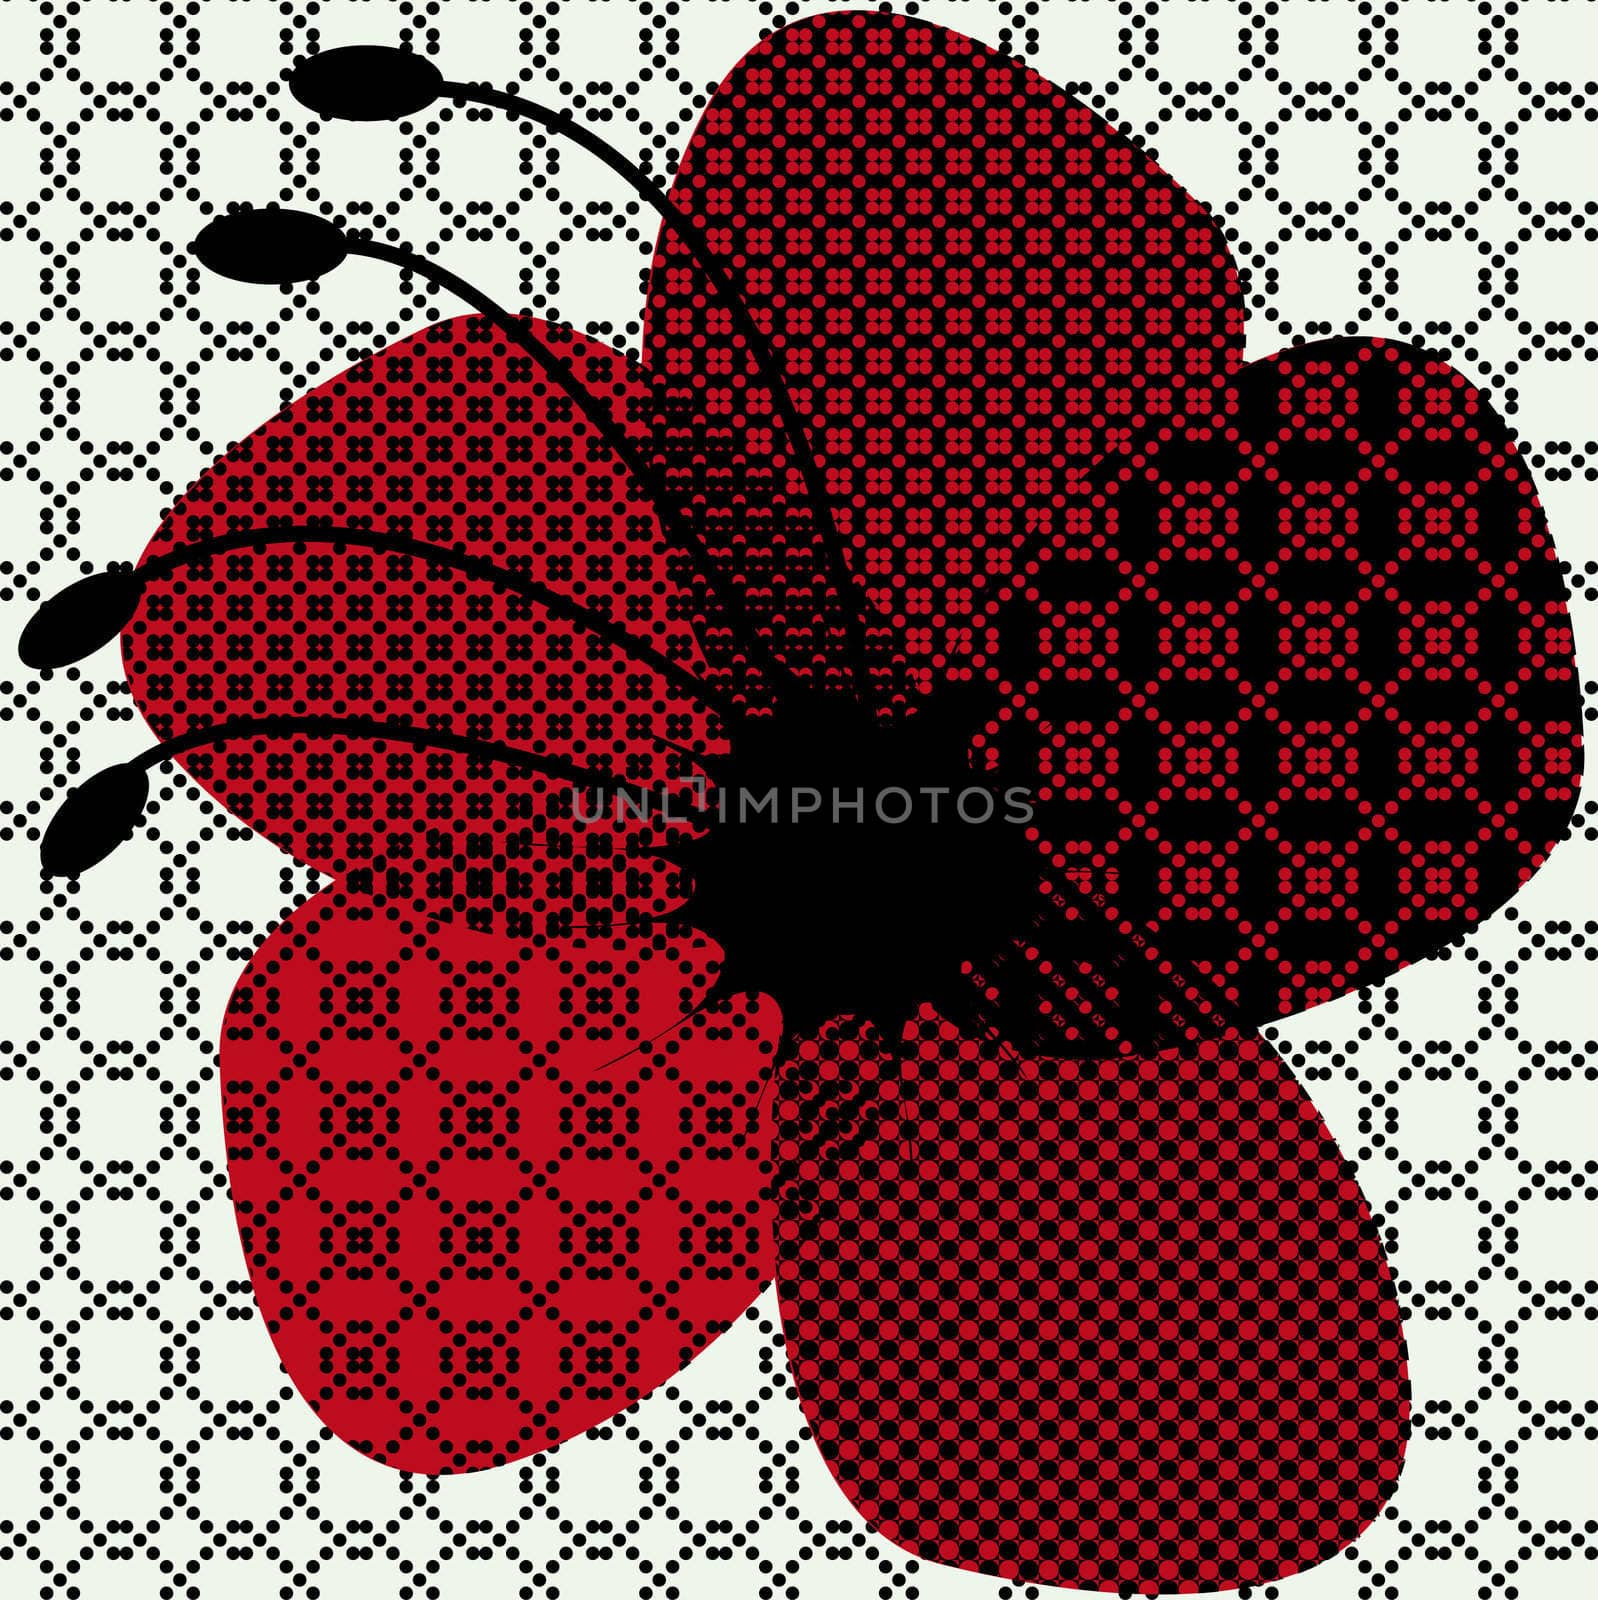 halftone red flower design on soft green background
